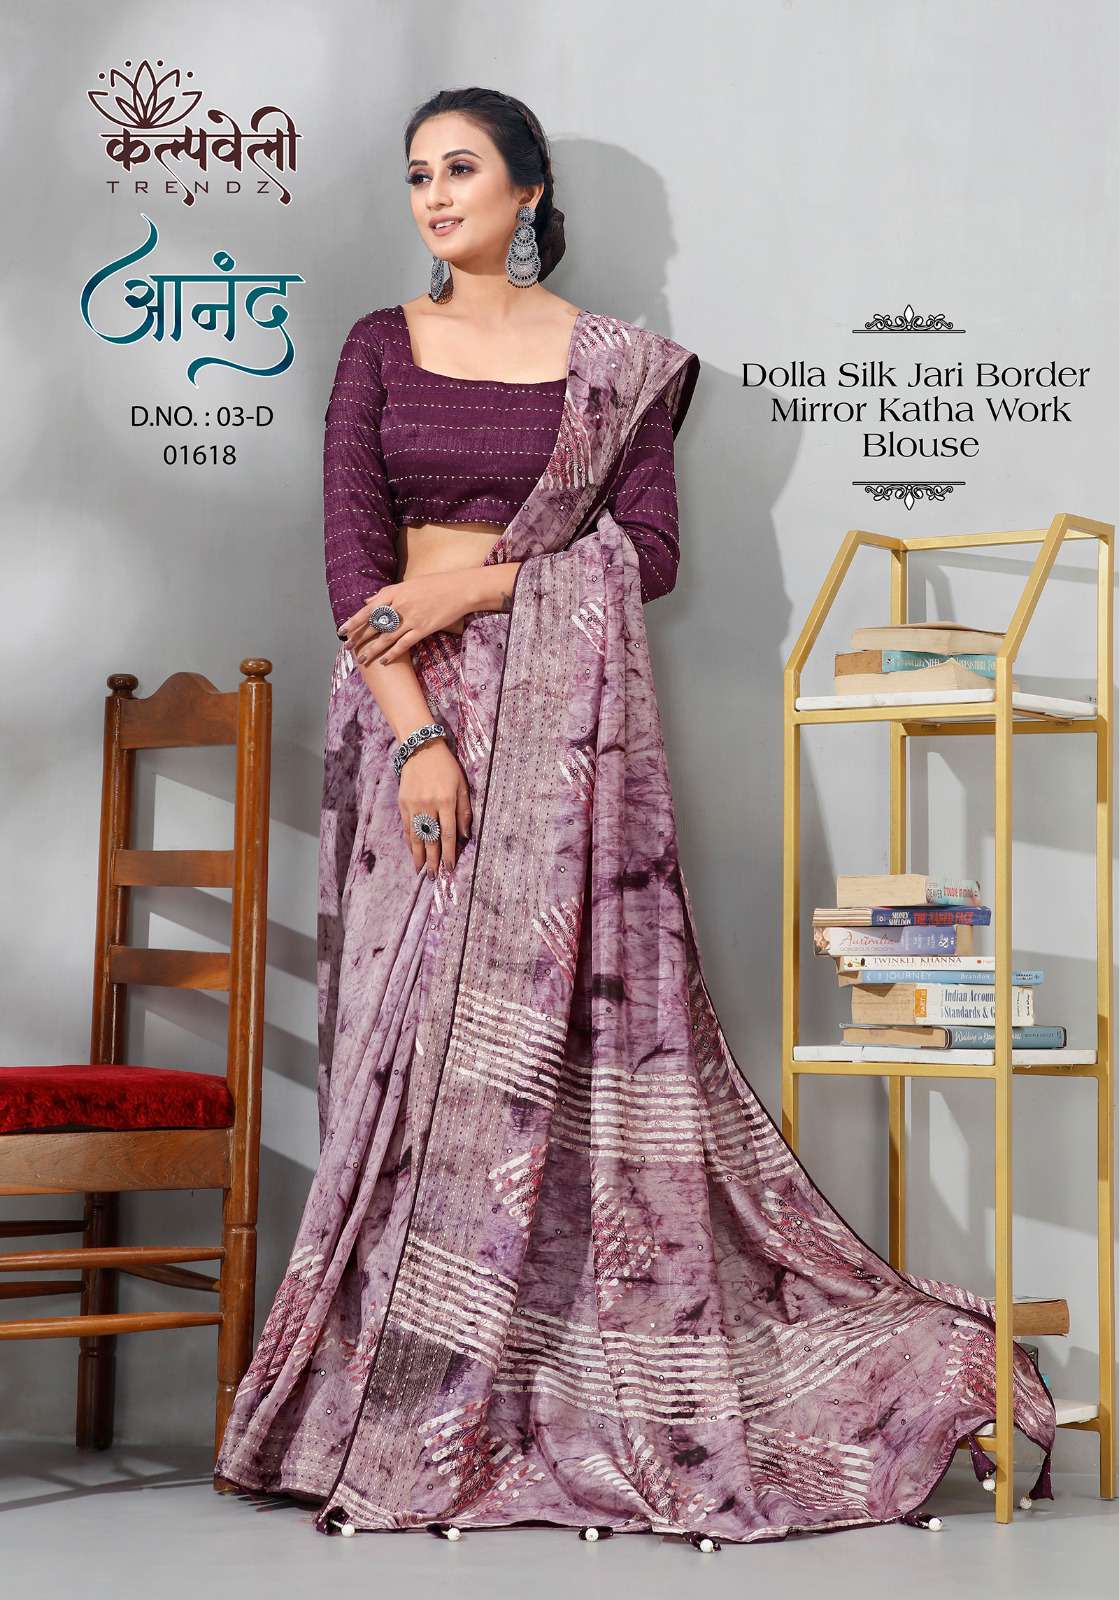 kalpavelly trendz anand 03 fancy dola silk sarees